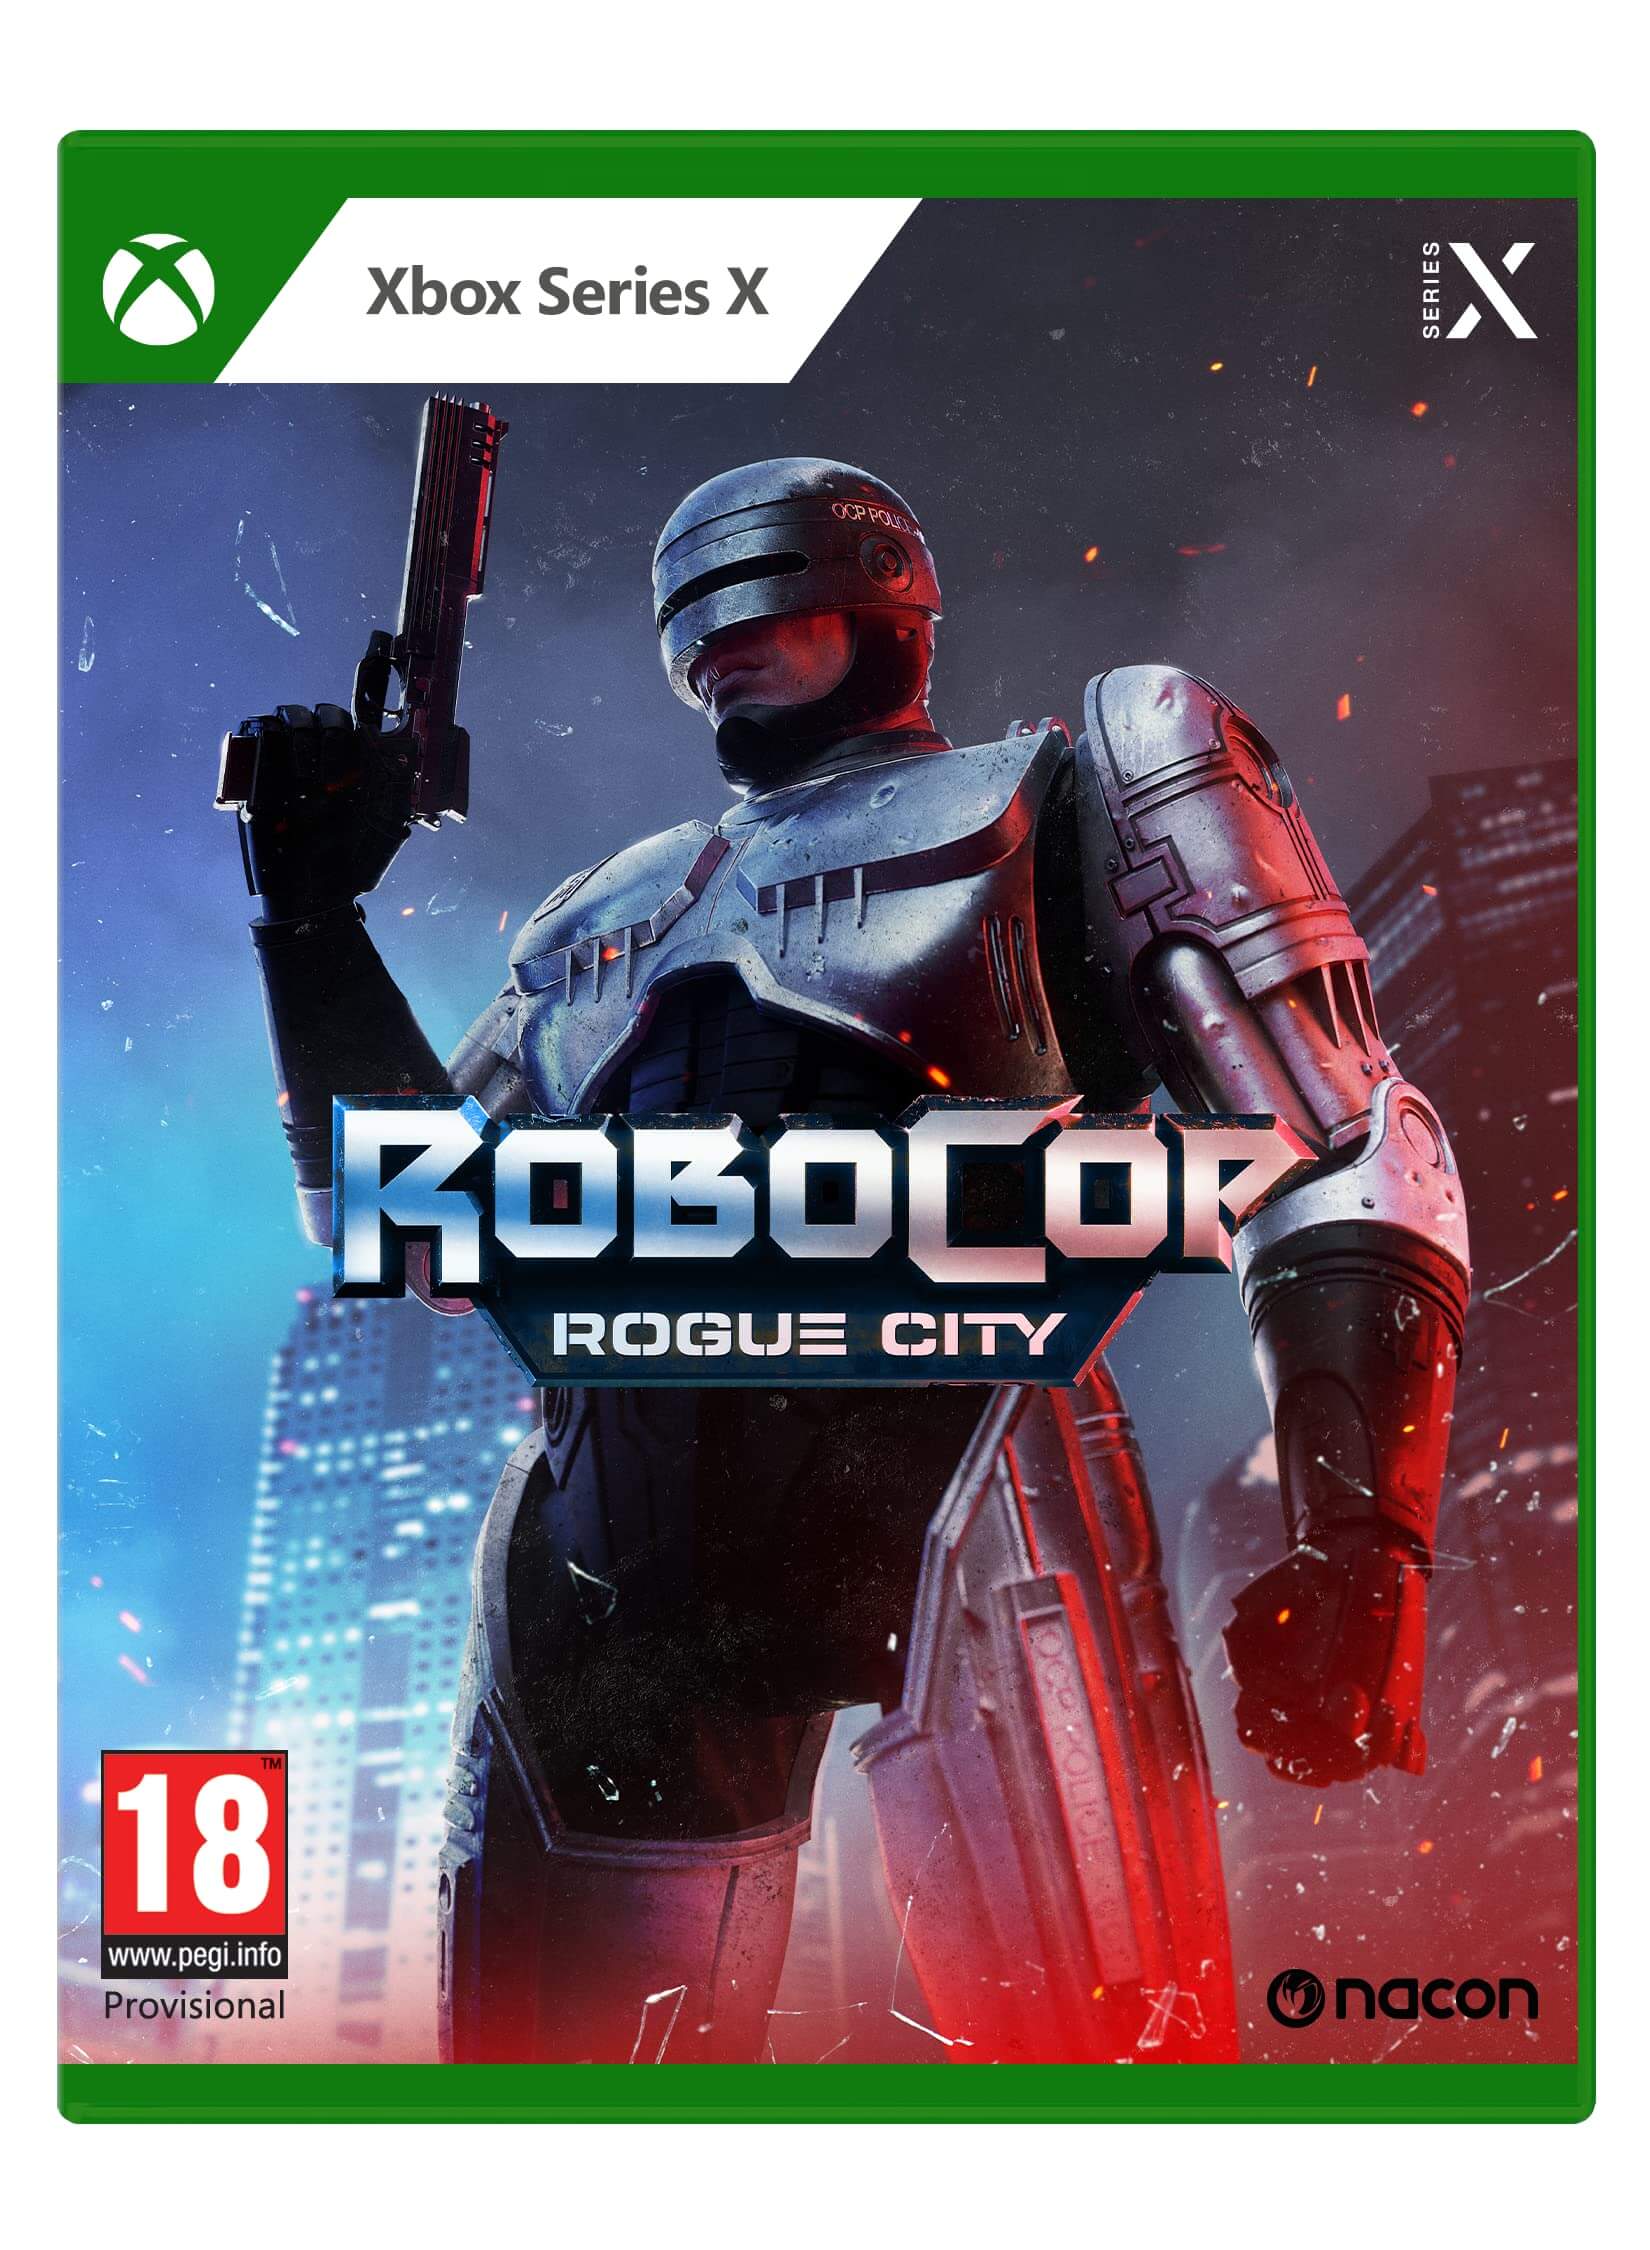 RoboCop Rogue City XBox Series X £37.99